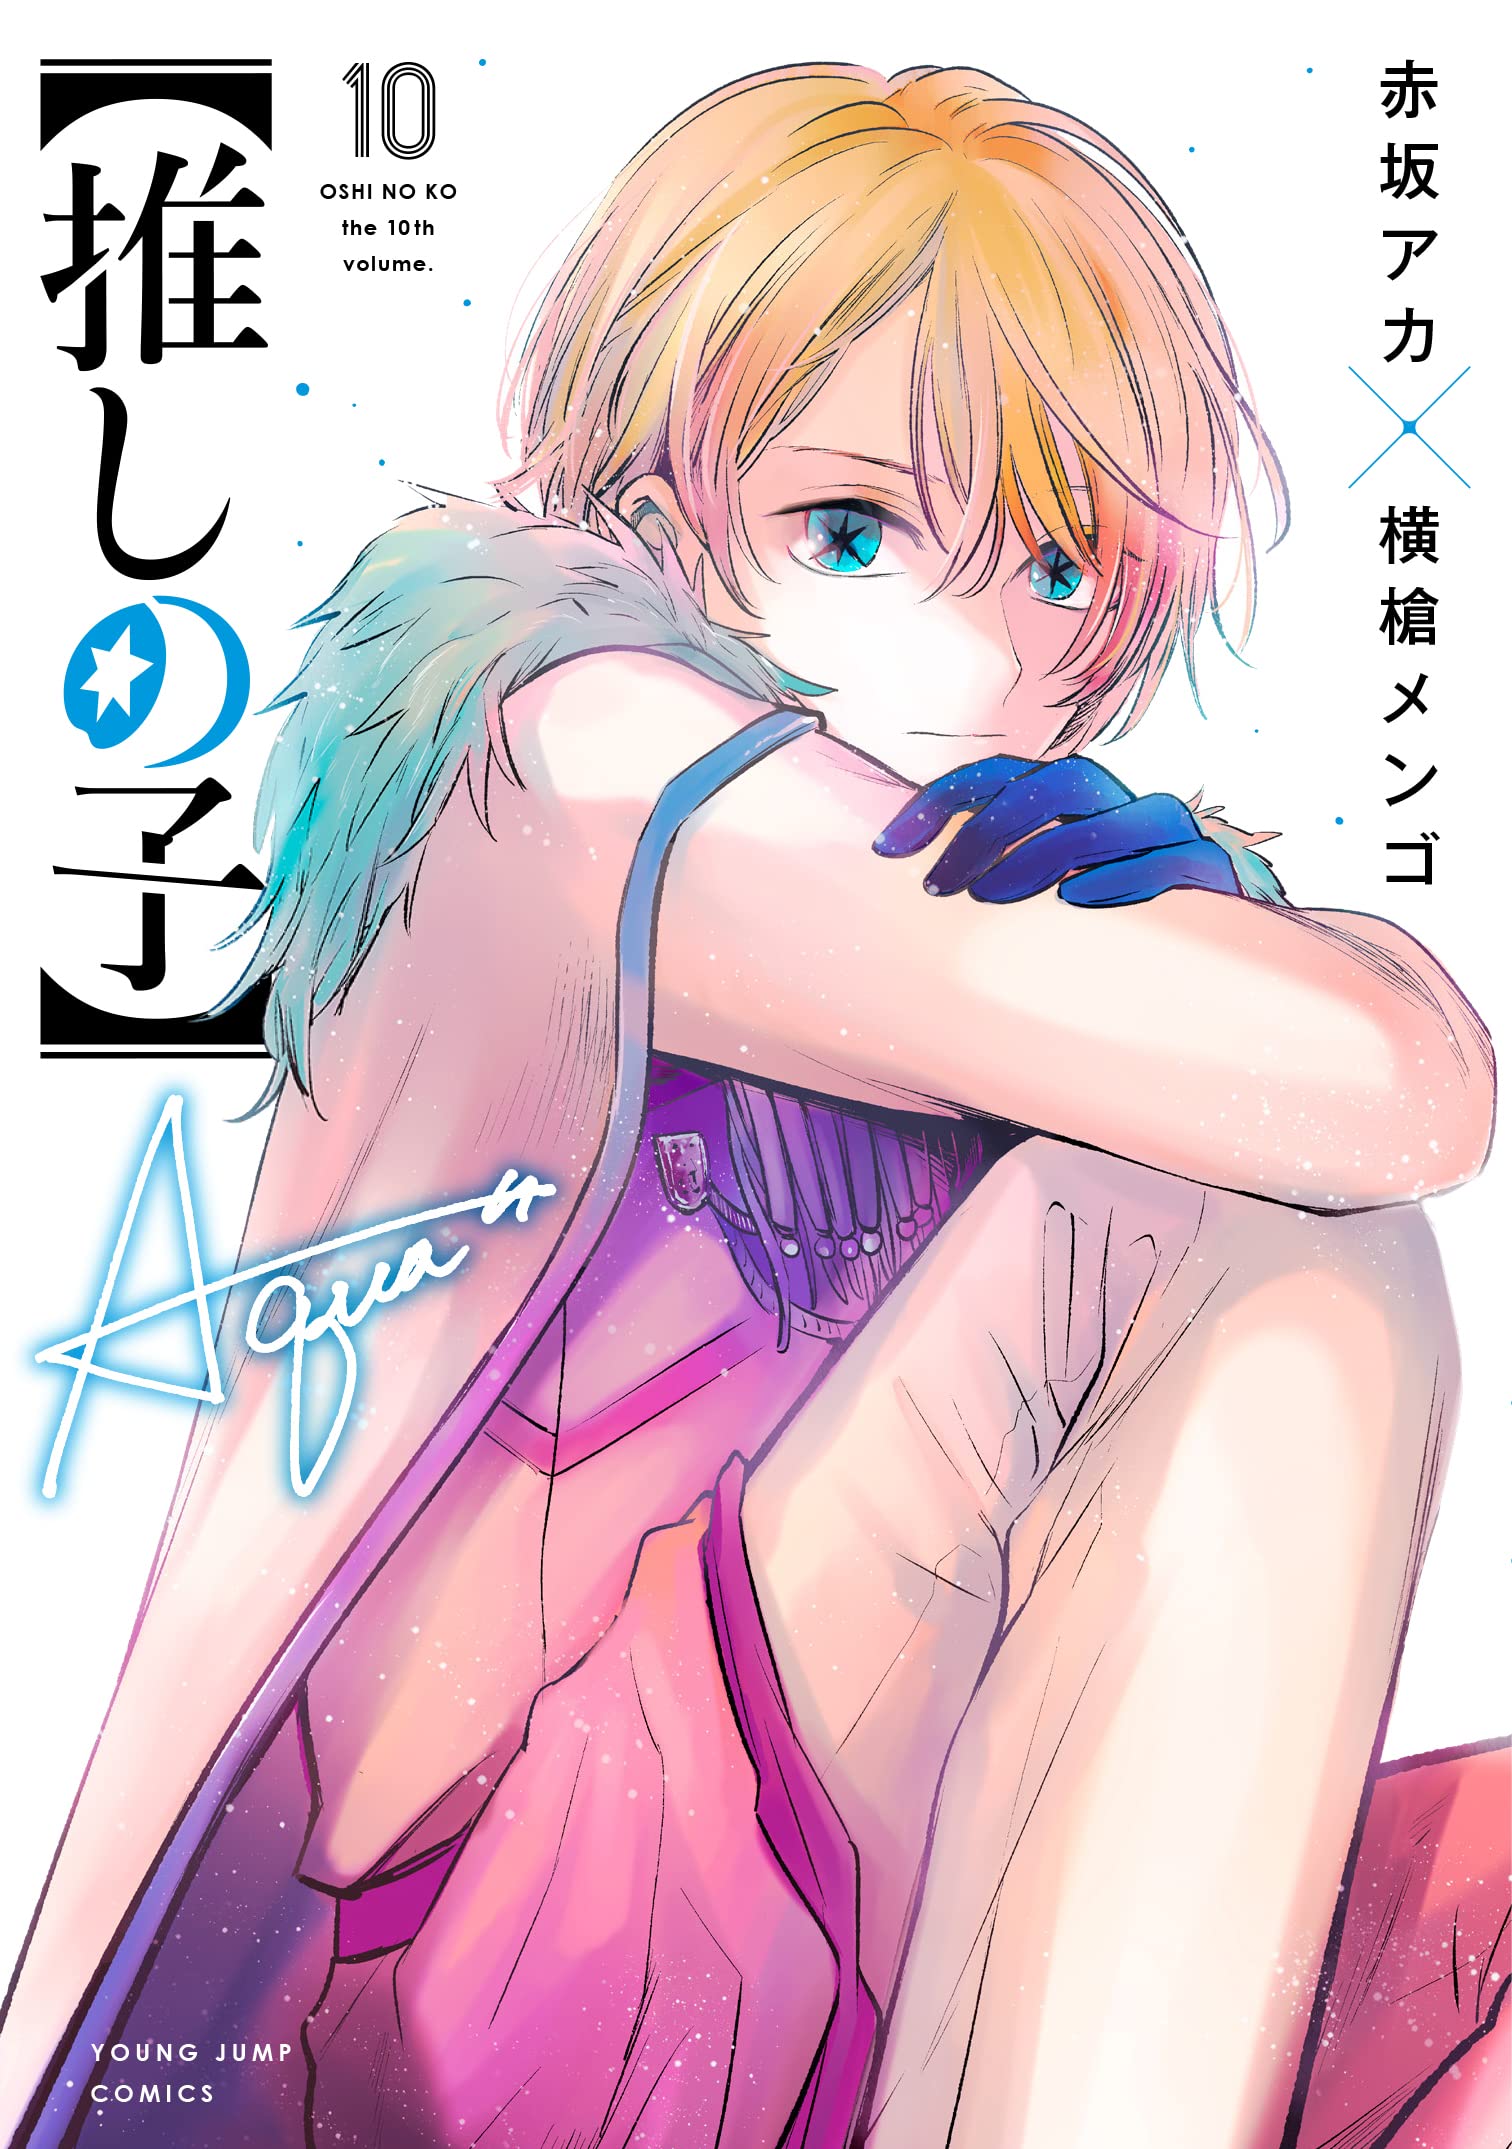 Autor de Kaguya-sama e Oshi no Ko terá novo manga na Young Jump